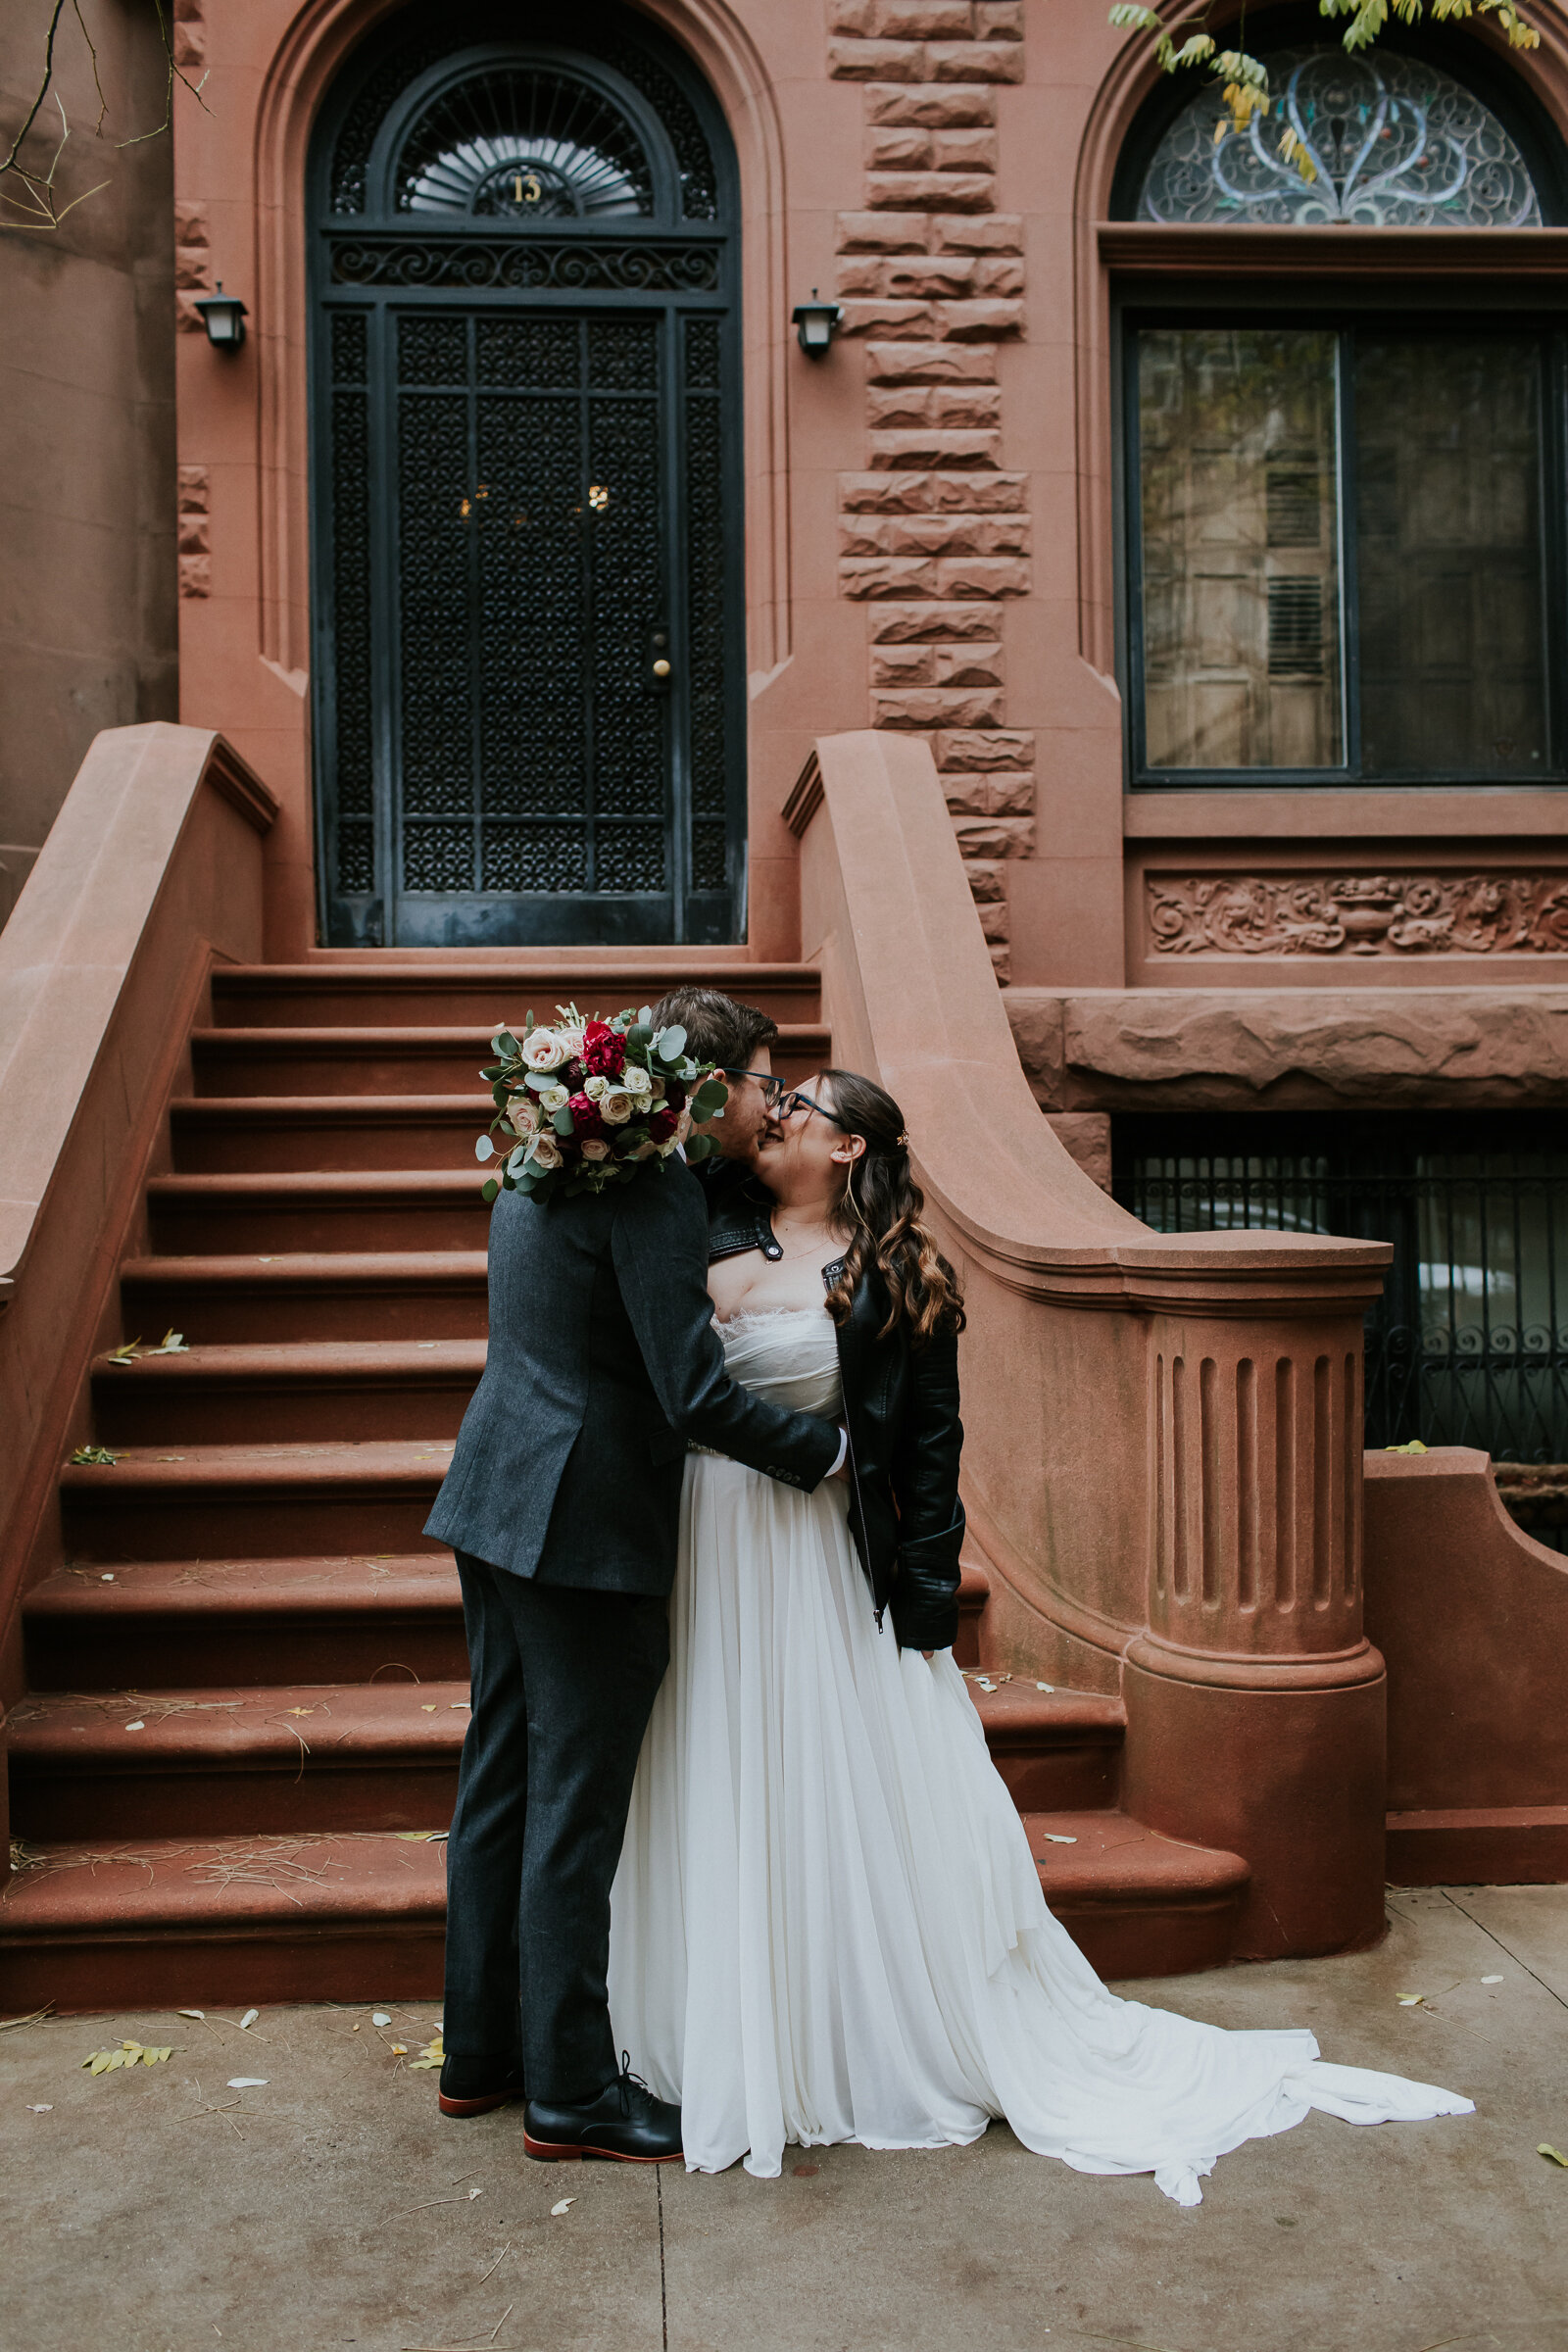 Best-Of-NYC-Brooklyn-2020-Wedding-Photography-Elvira-Kalviste-107.jpg